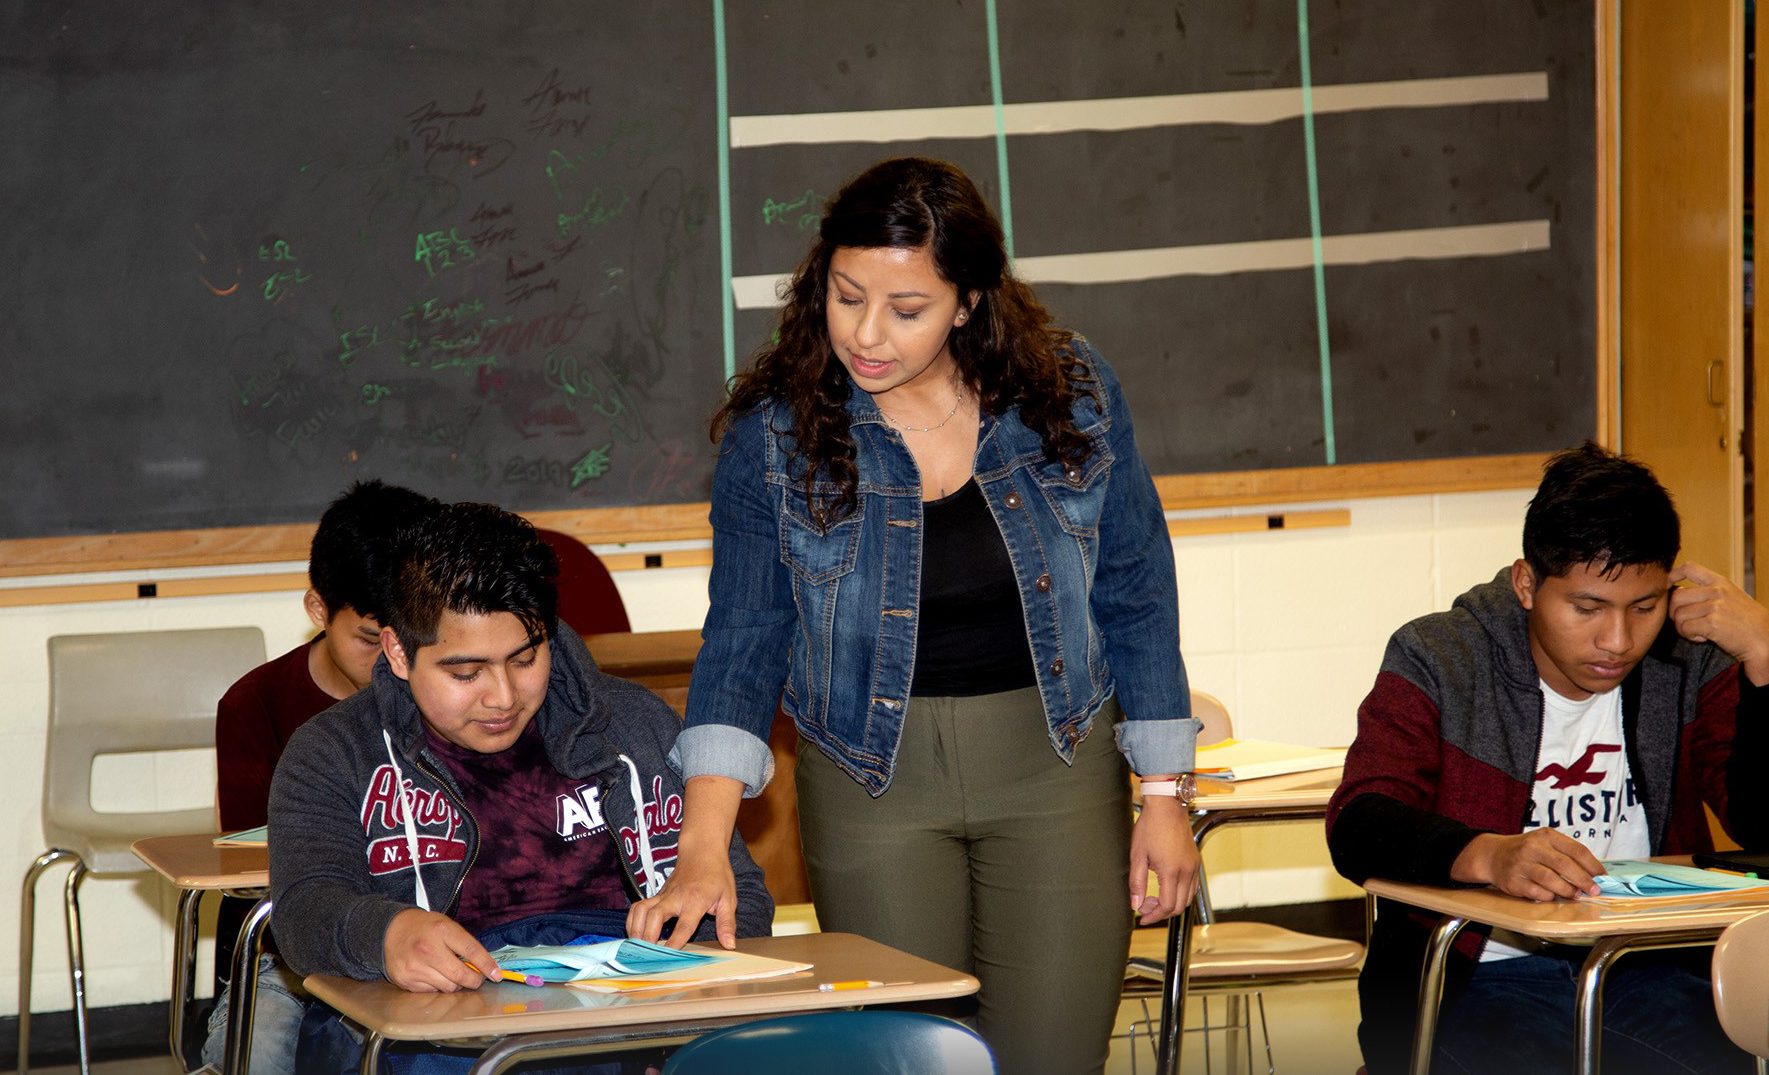 High school teacher instructs a student in a classroom.